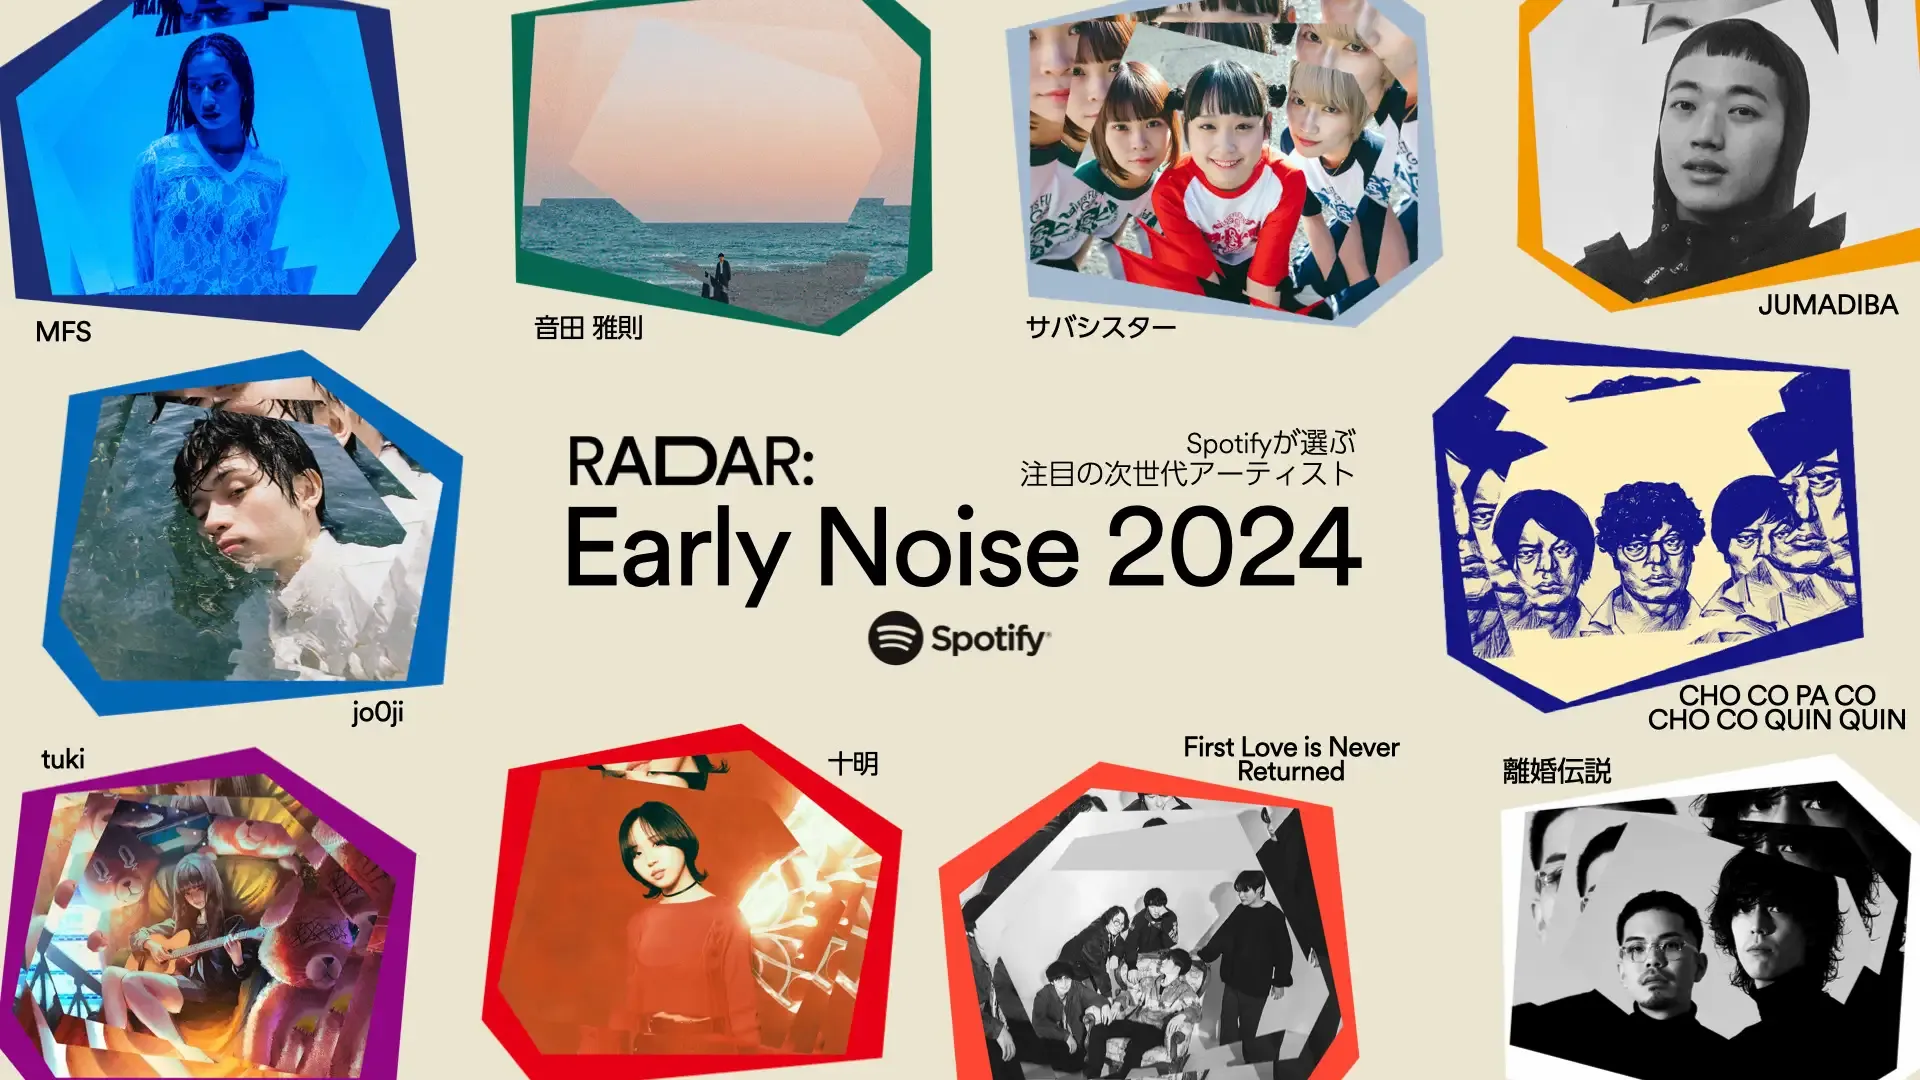 Spotifyが2024年に躍進を期待する次世代アーティスト「RADAR: Early Noise 2024」を発表 - massive